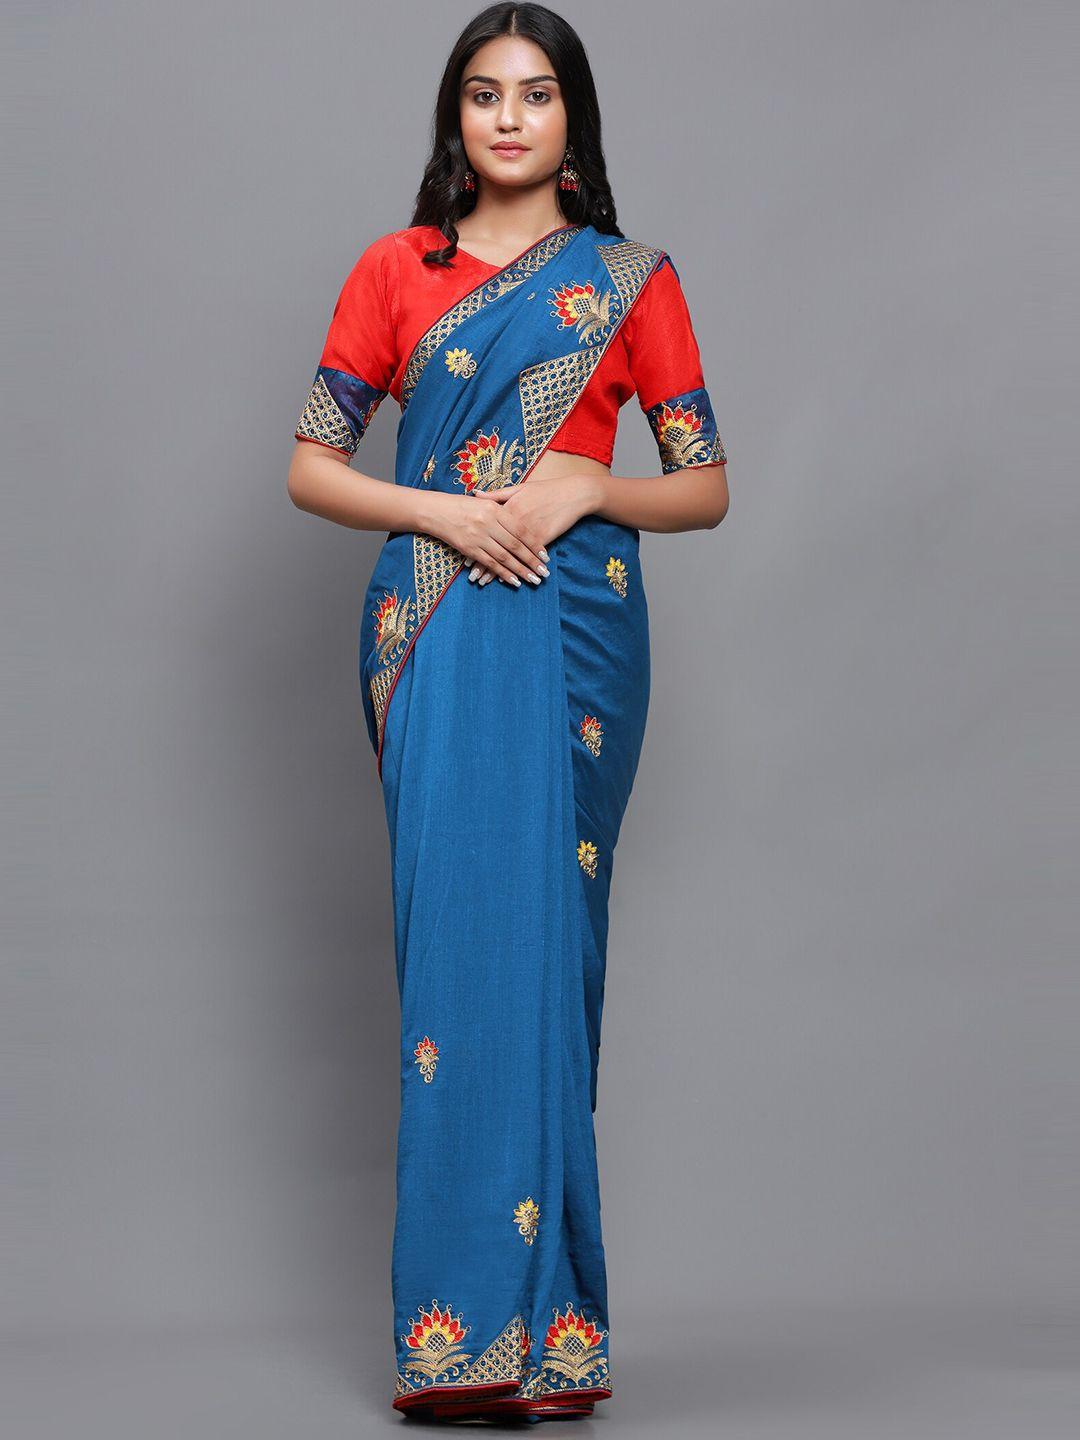 3buddy fashion turquoise blue & red floral embroidered jute silk venkatgiri saree